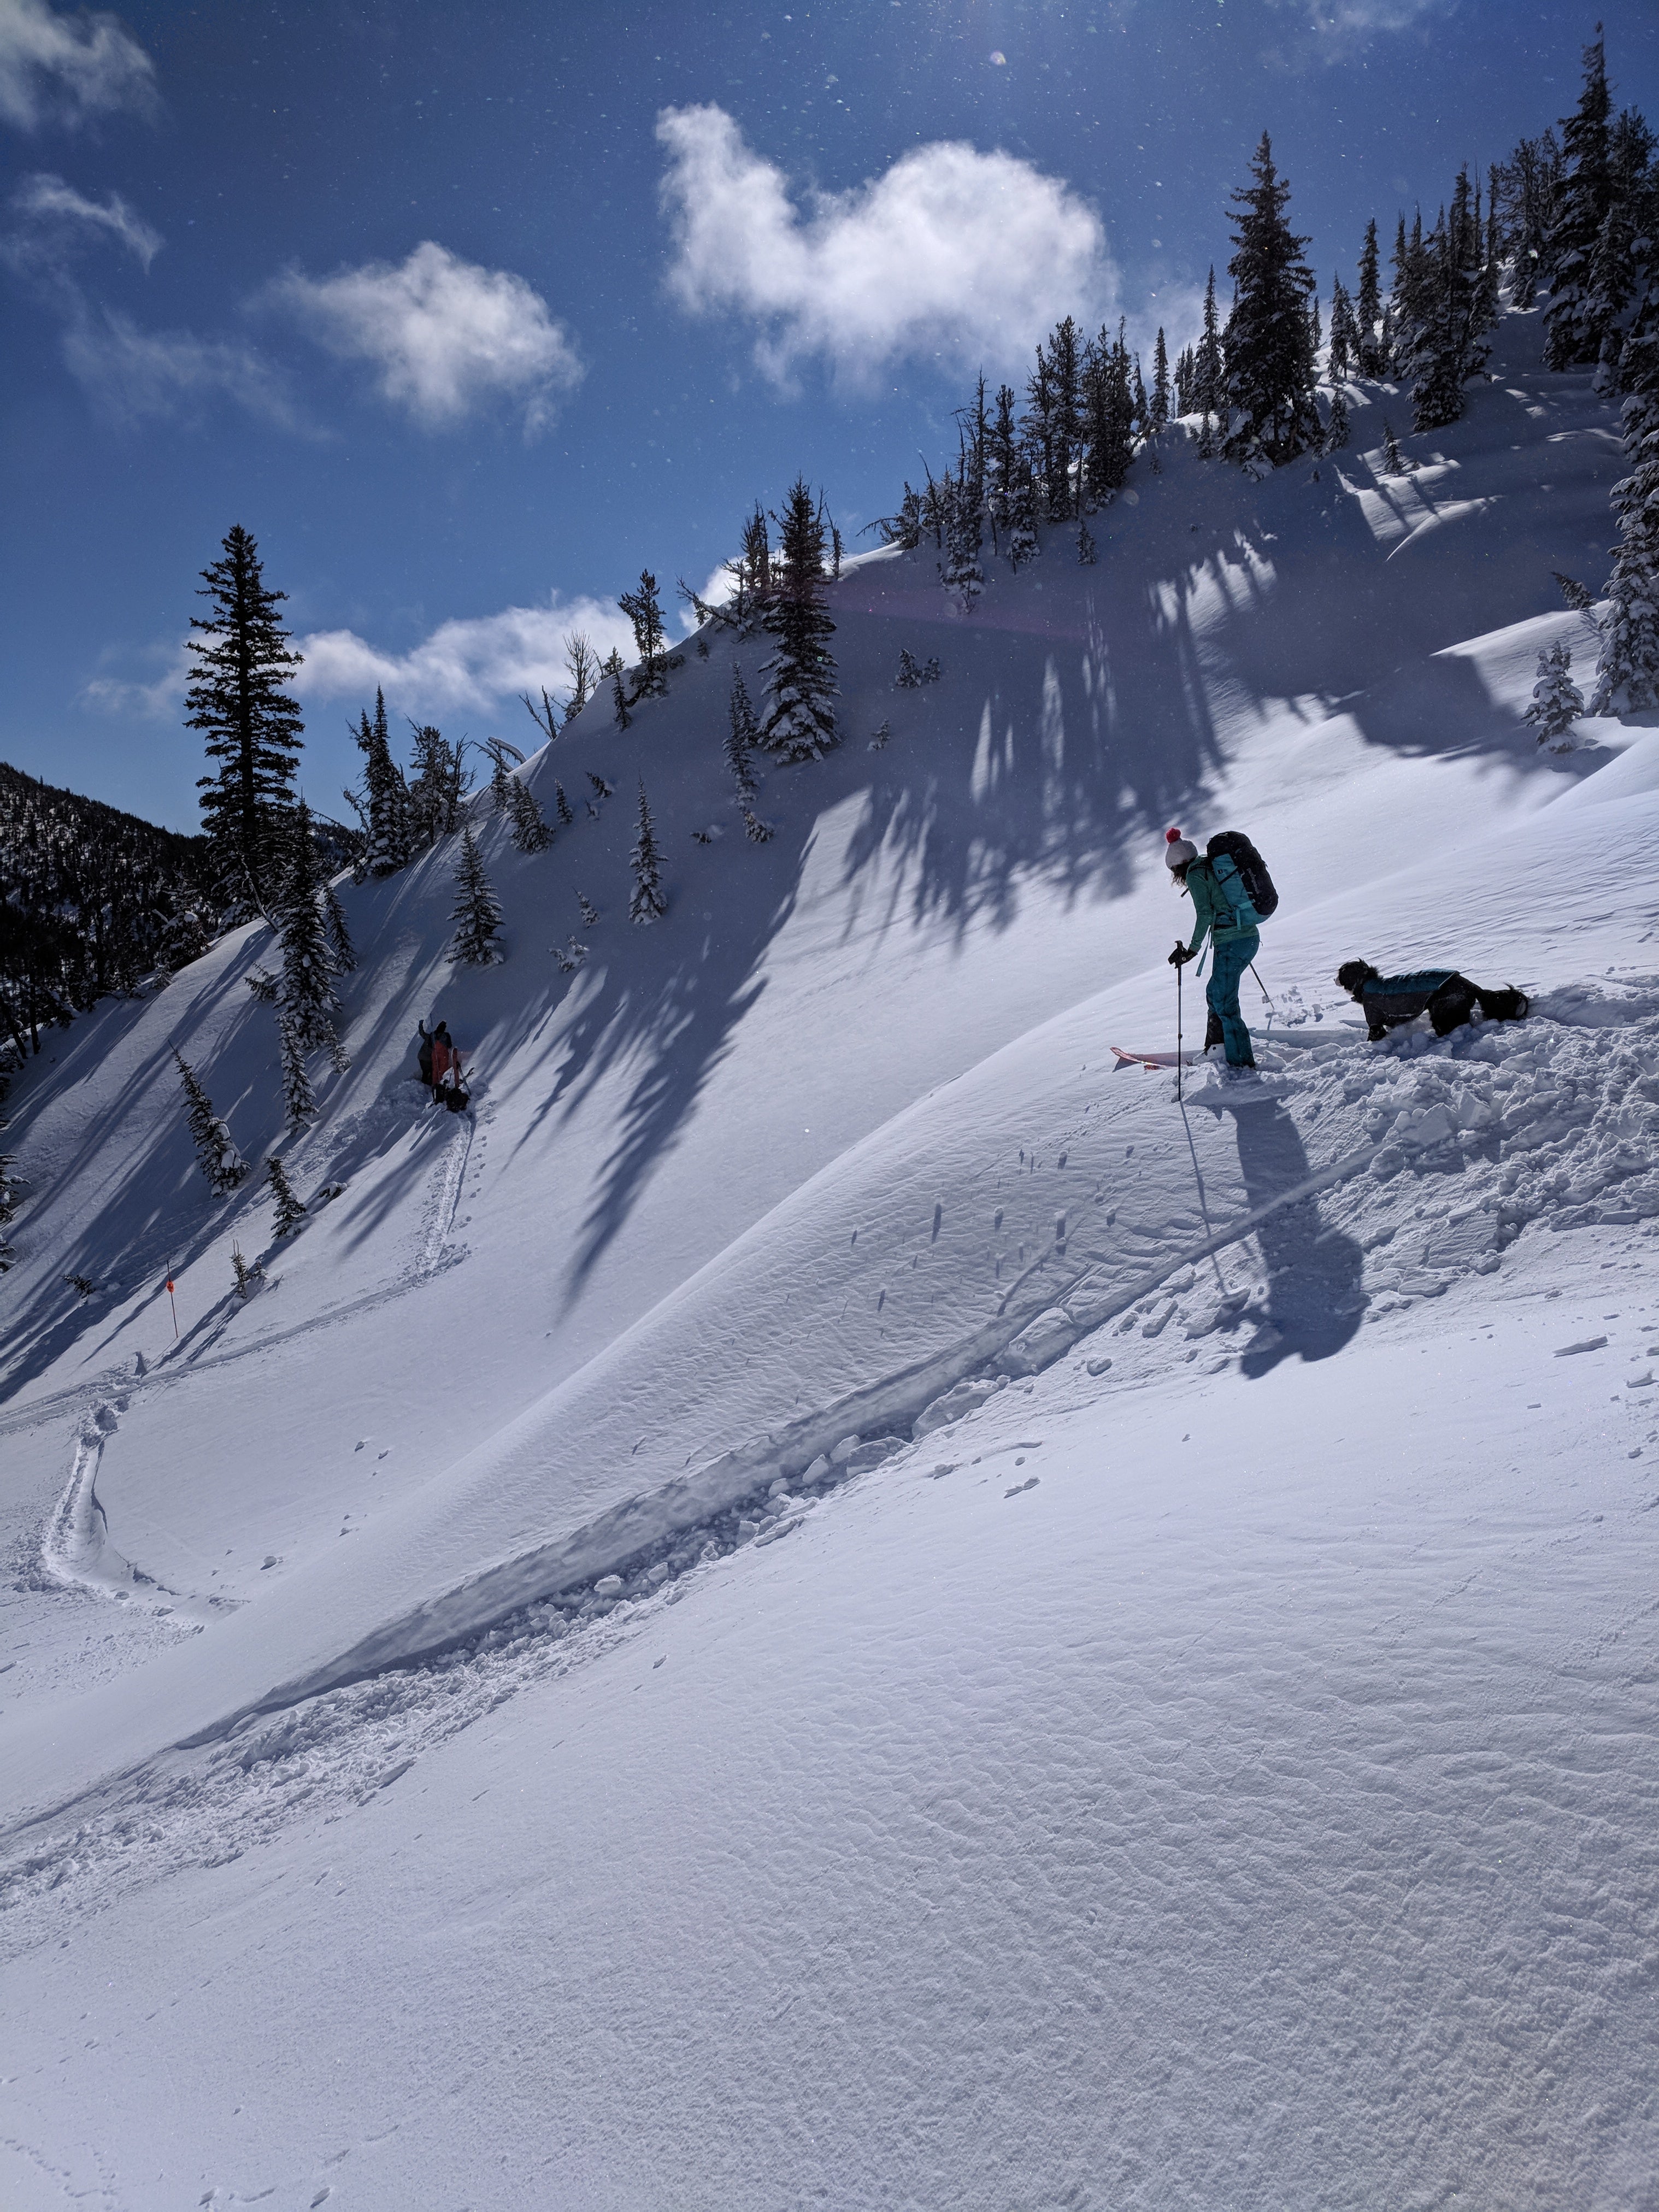 Alli and Riggins drop into a ski slope.